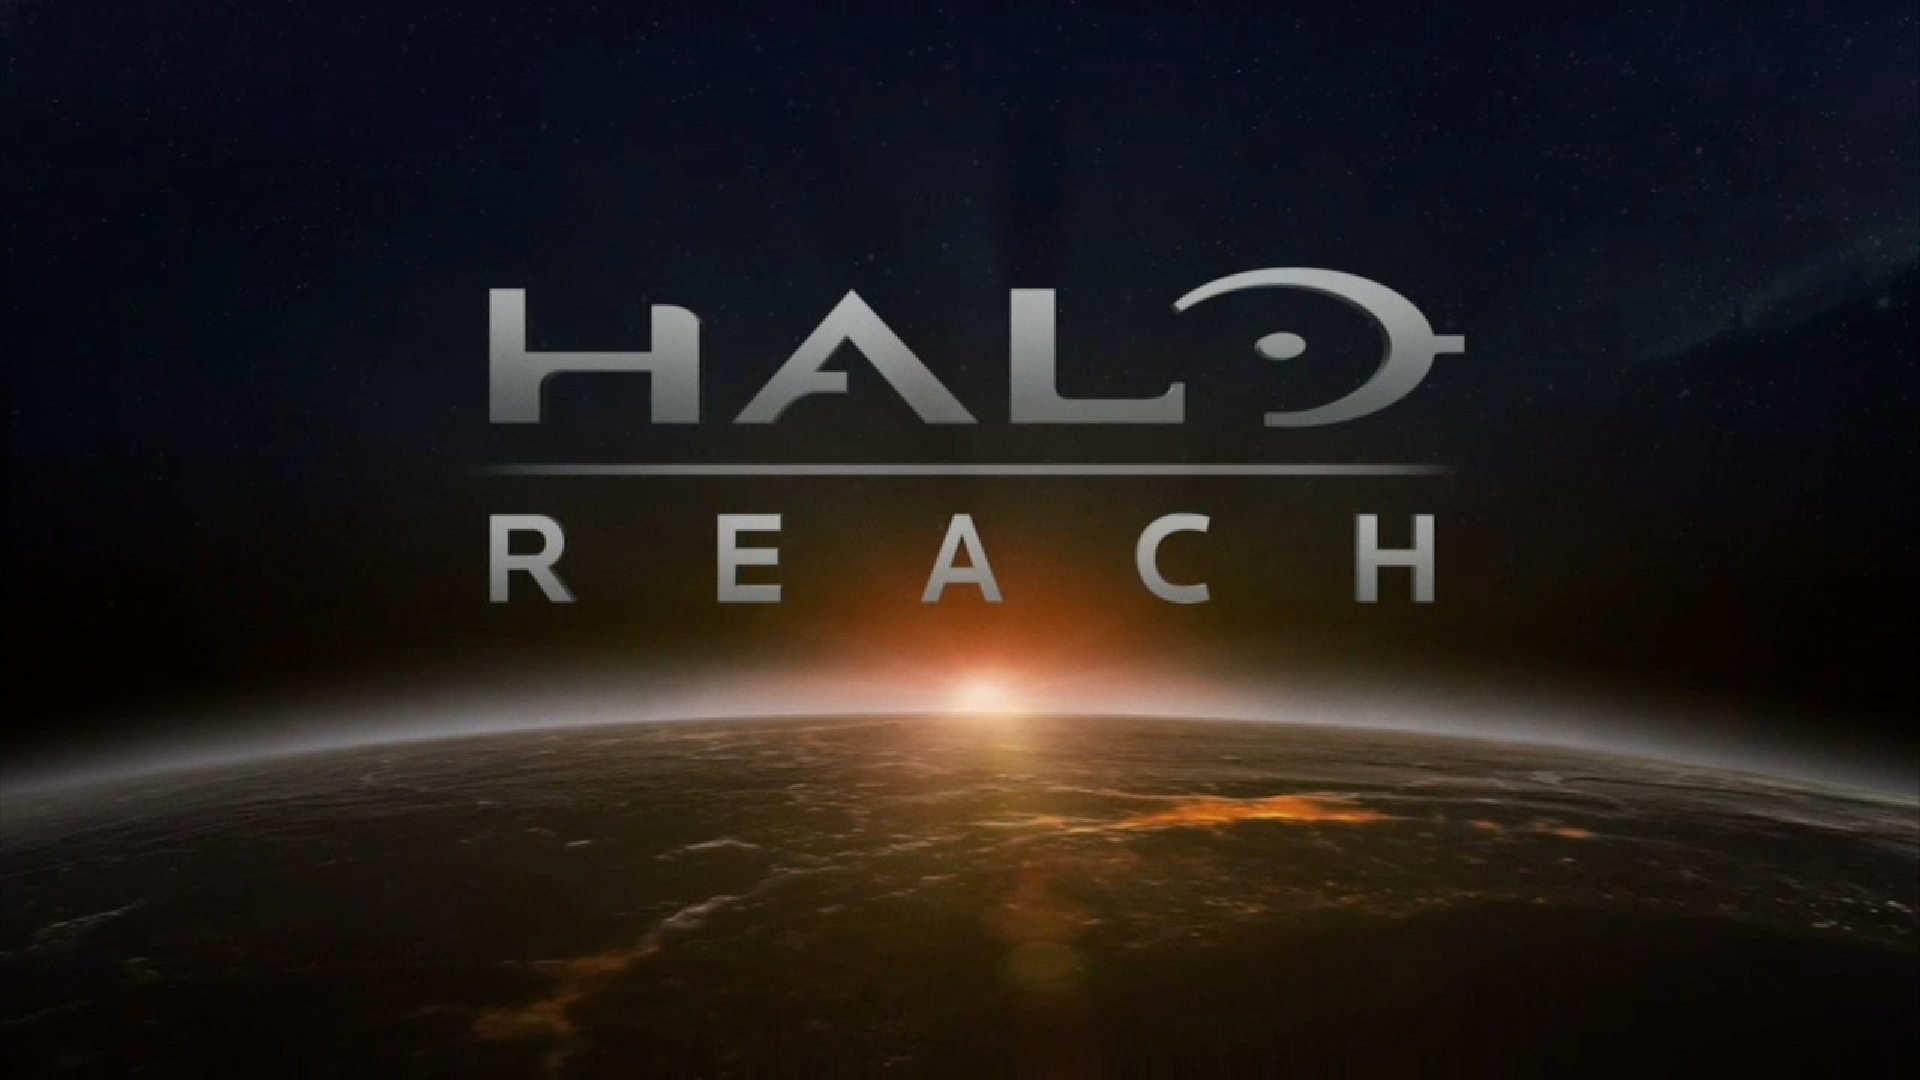 Halo: Reach Logo